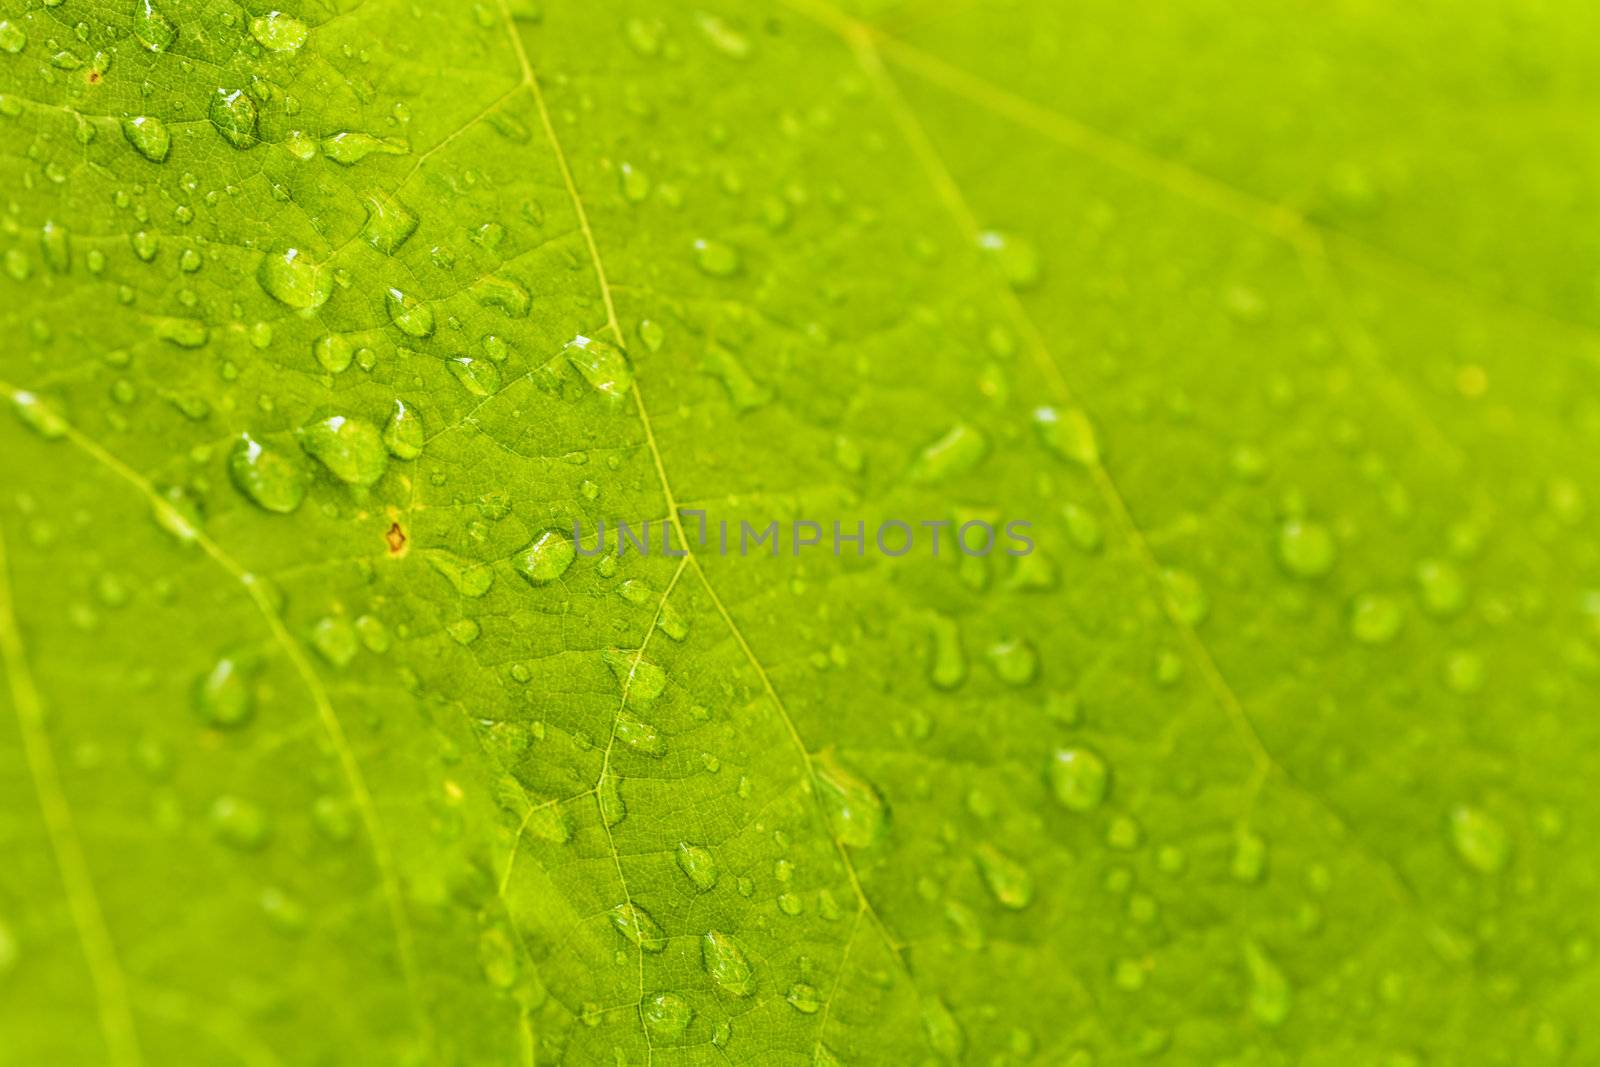 pure rain drops on a green leaf by Serp